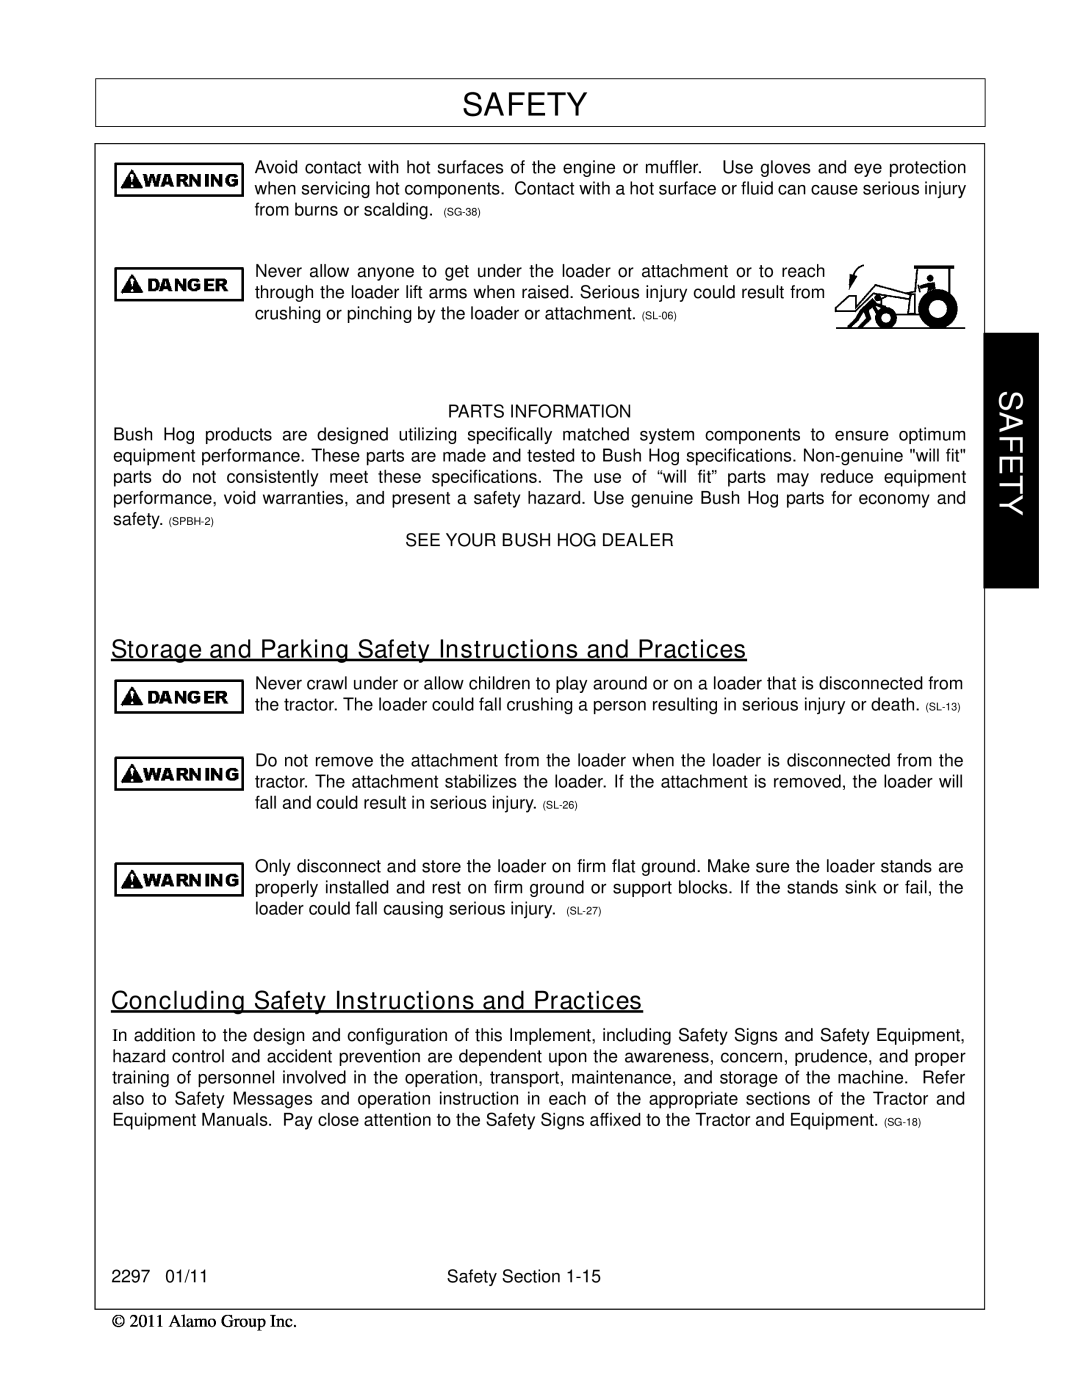 Bush Hog 2297 Storage and Parking Safety Instructions and Practices, Concluding Safety Instructions and Practices 